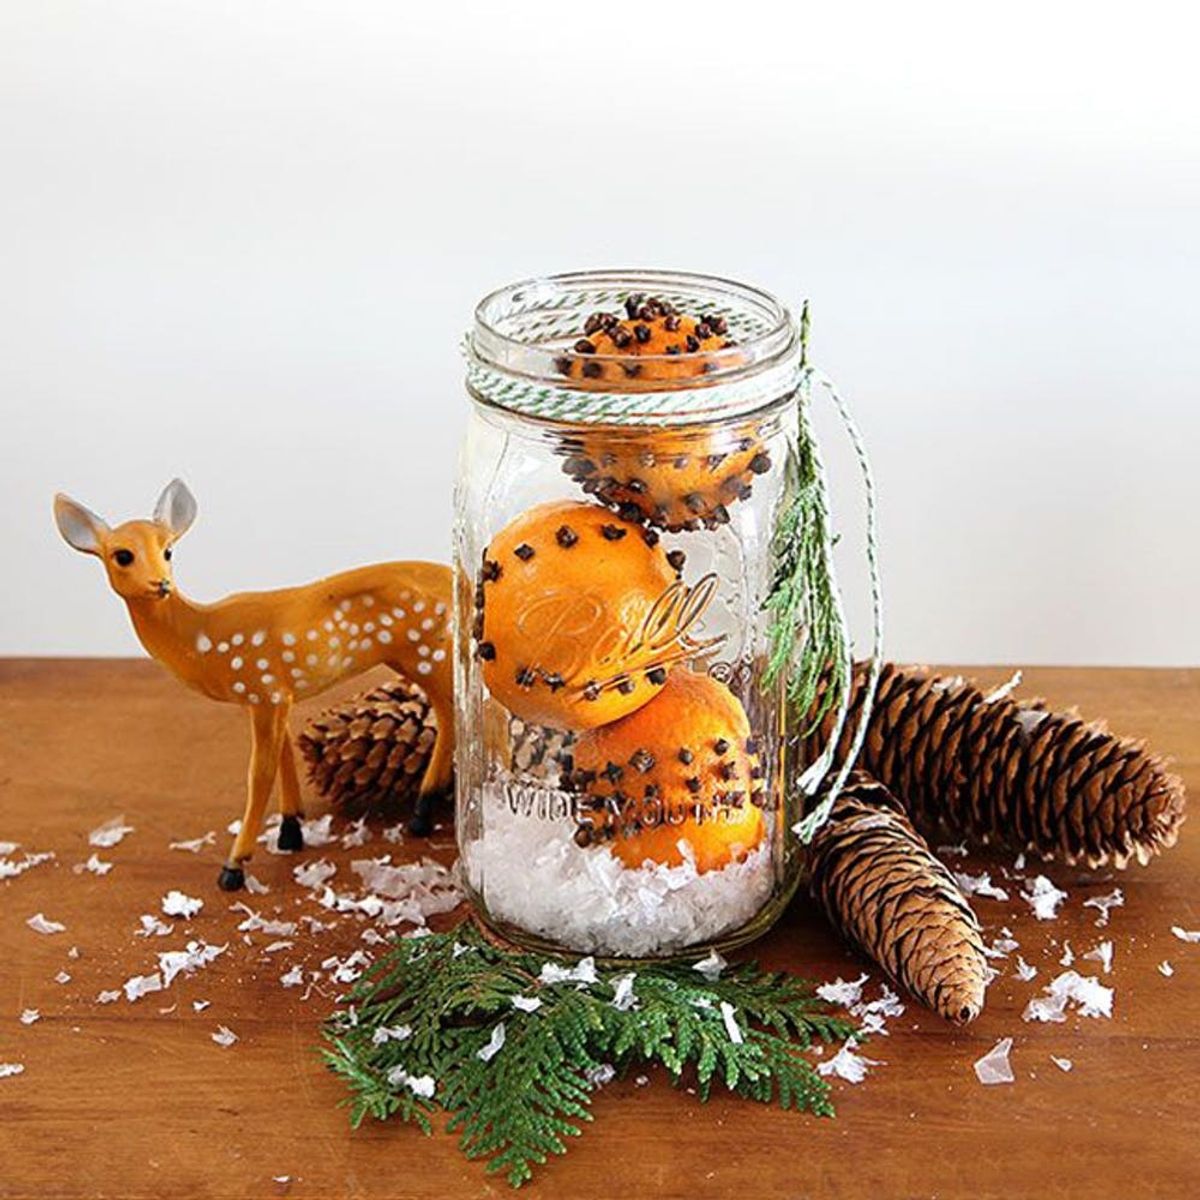 15 Festive Ways to Decorate With Mason Jars